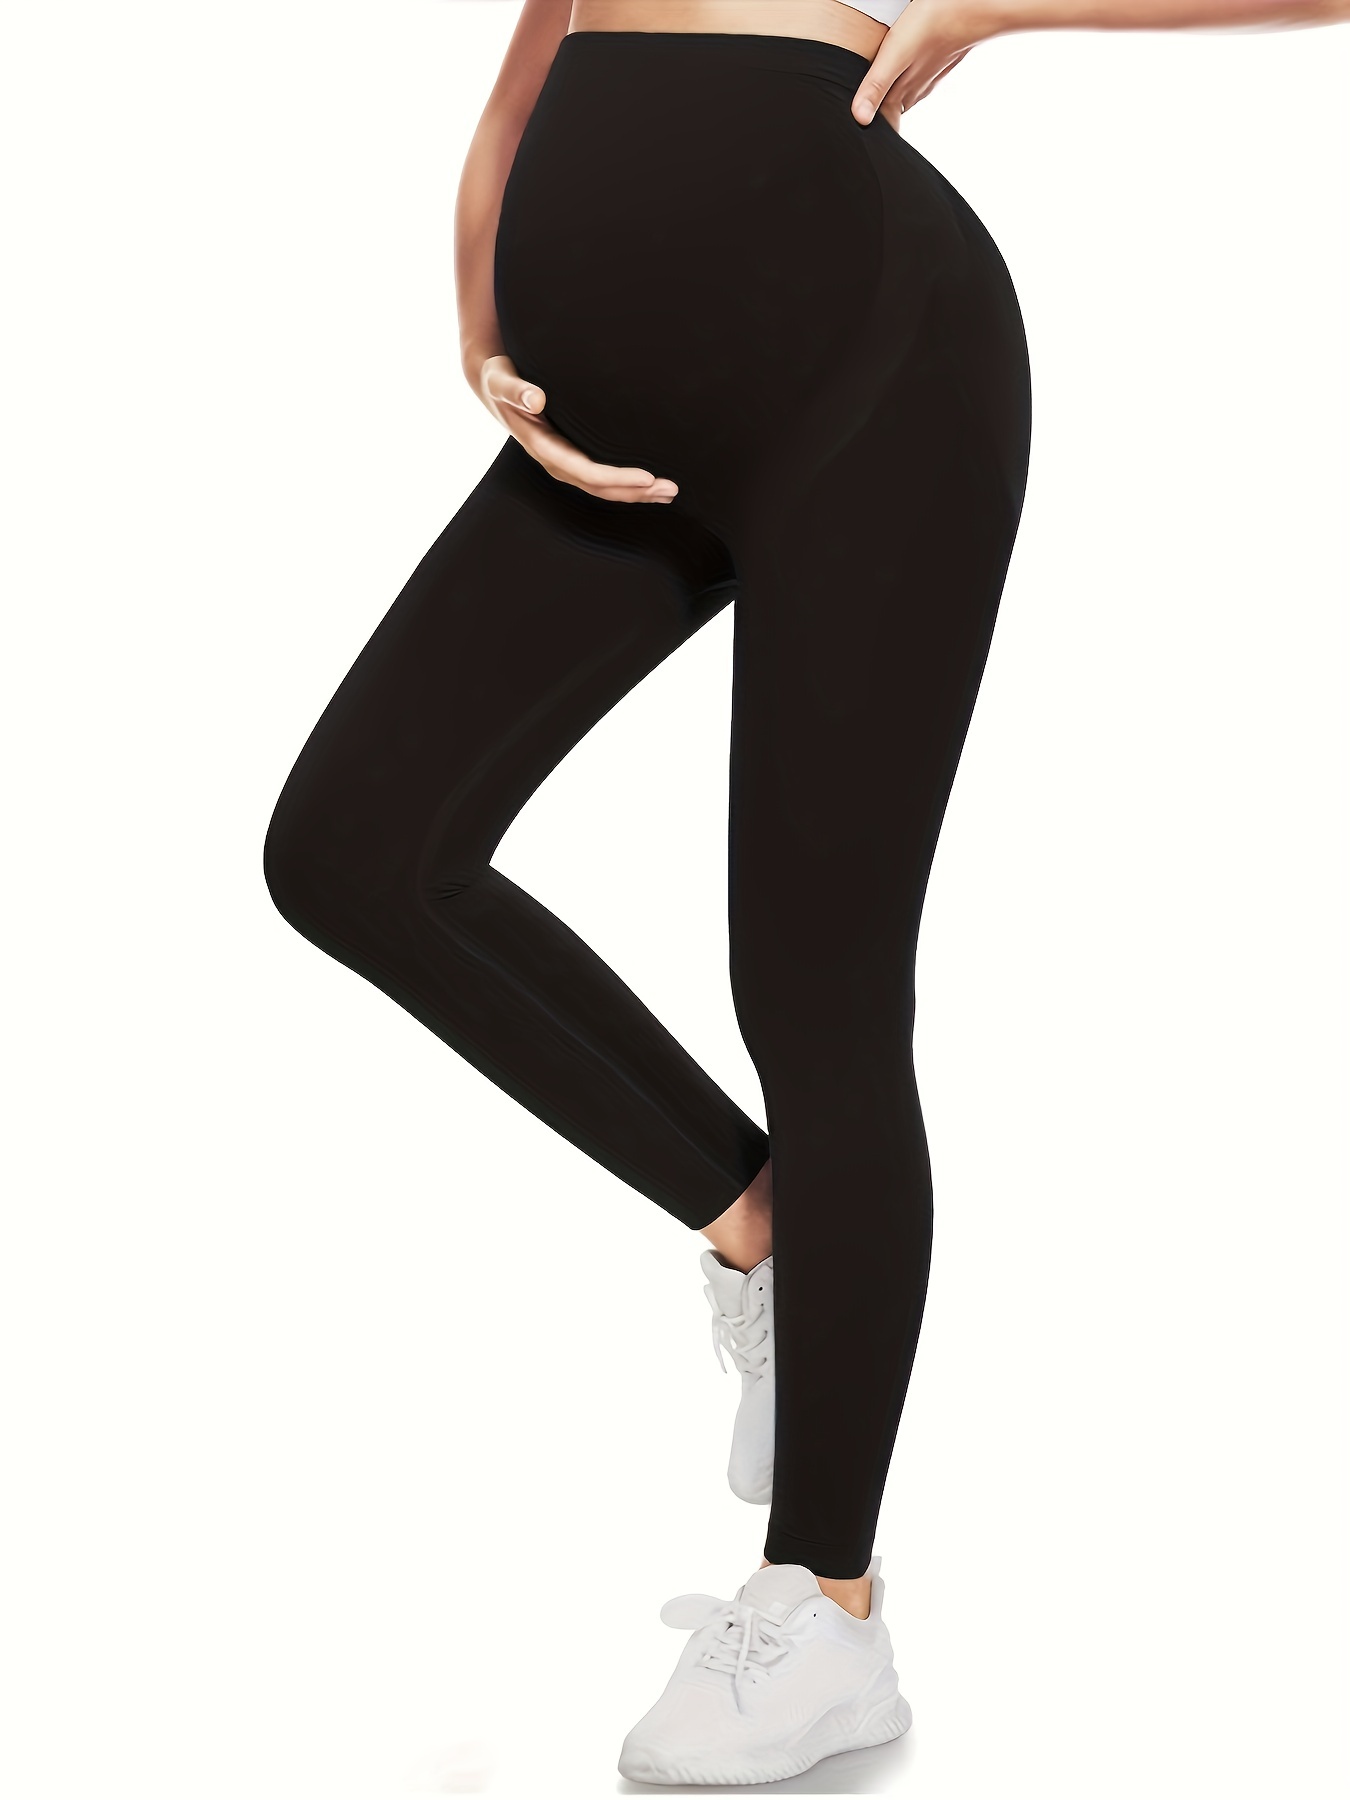 Pgeraug pants for women High-Waisted Bellies For Pregnant Comfortable  Leggings Pants Trousers leggings B XL 